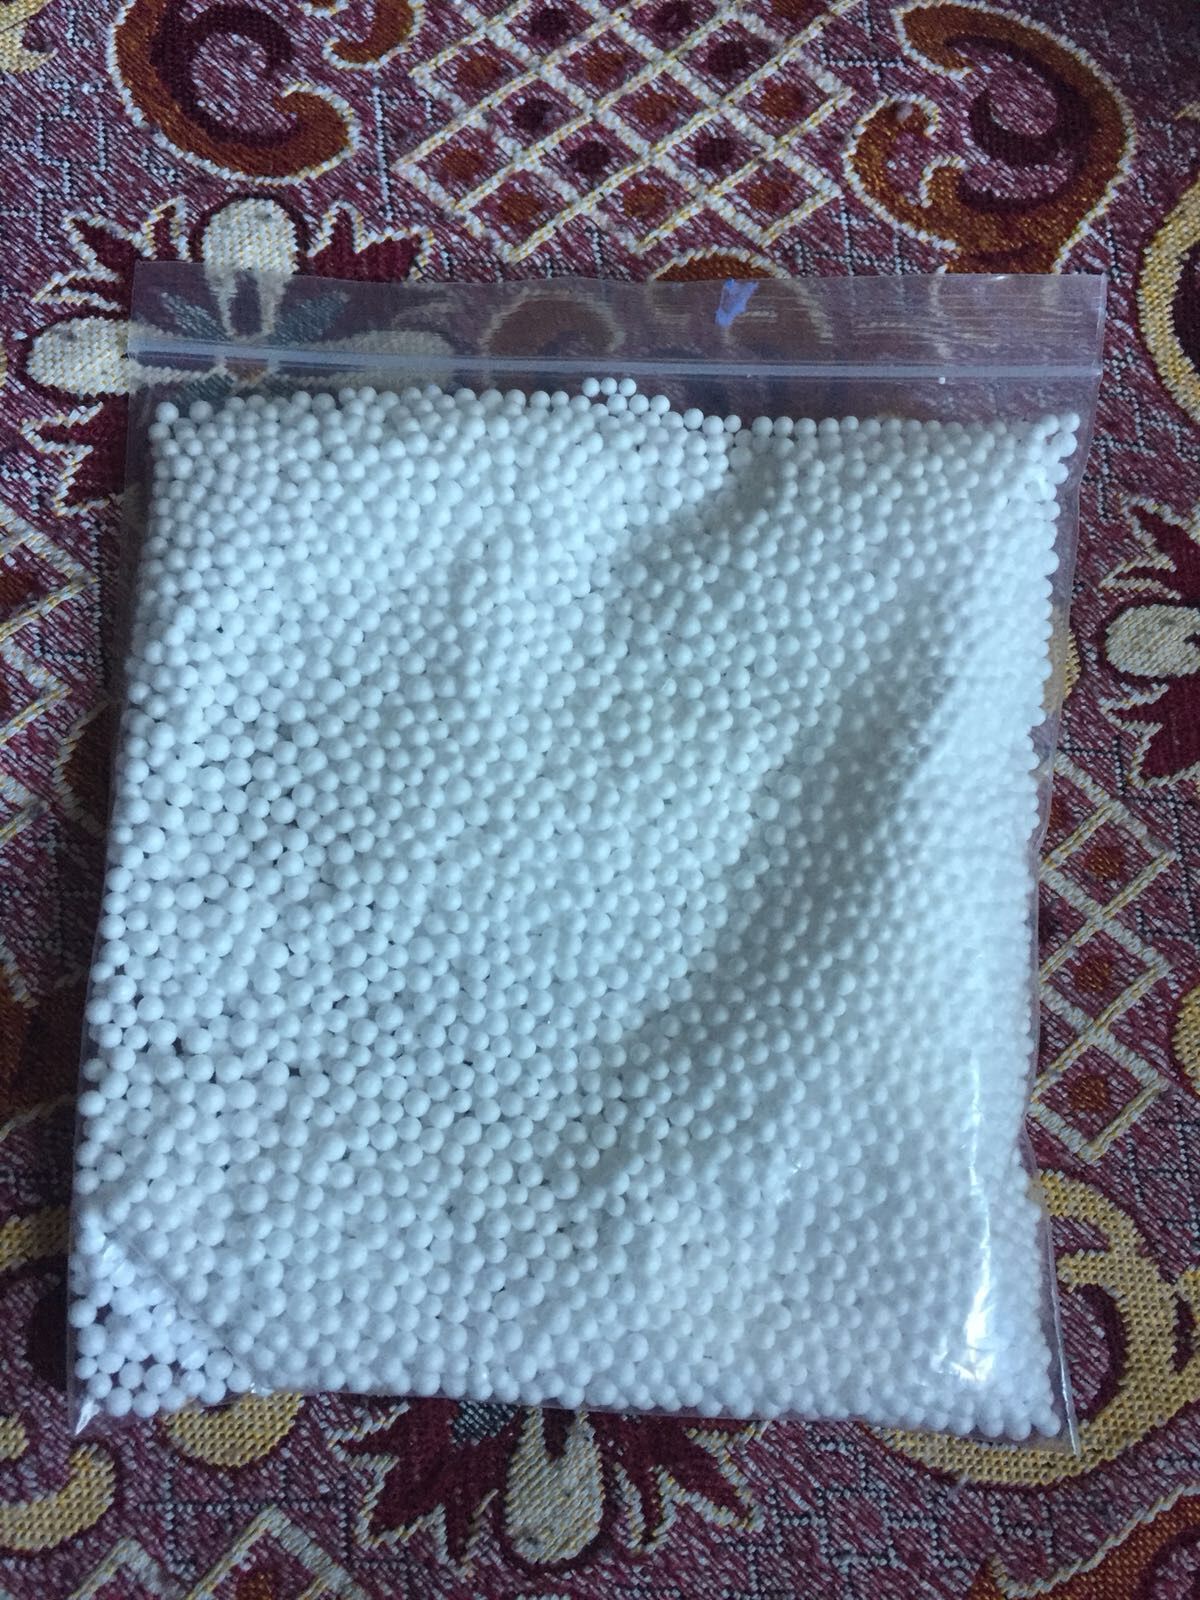 Floam beads (each for 1 dollar)